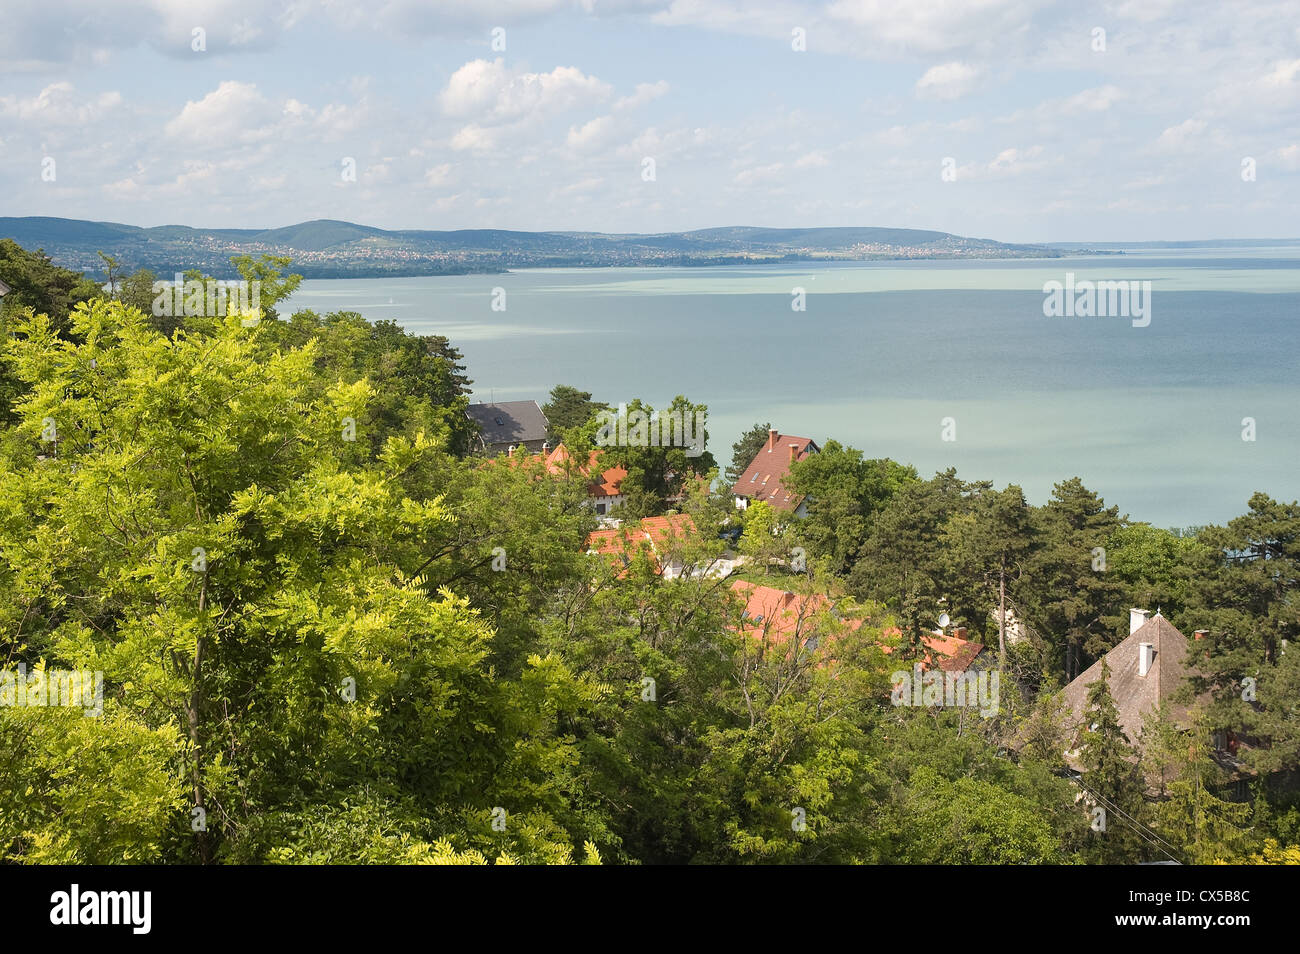 Hungary balaton resort hi-res stock photography and images - Alamy